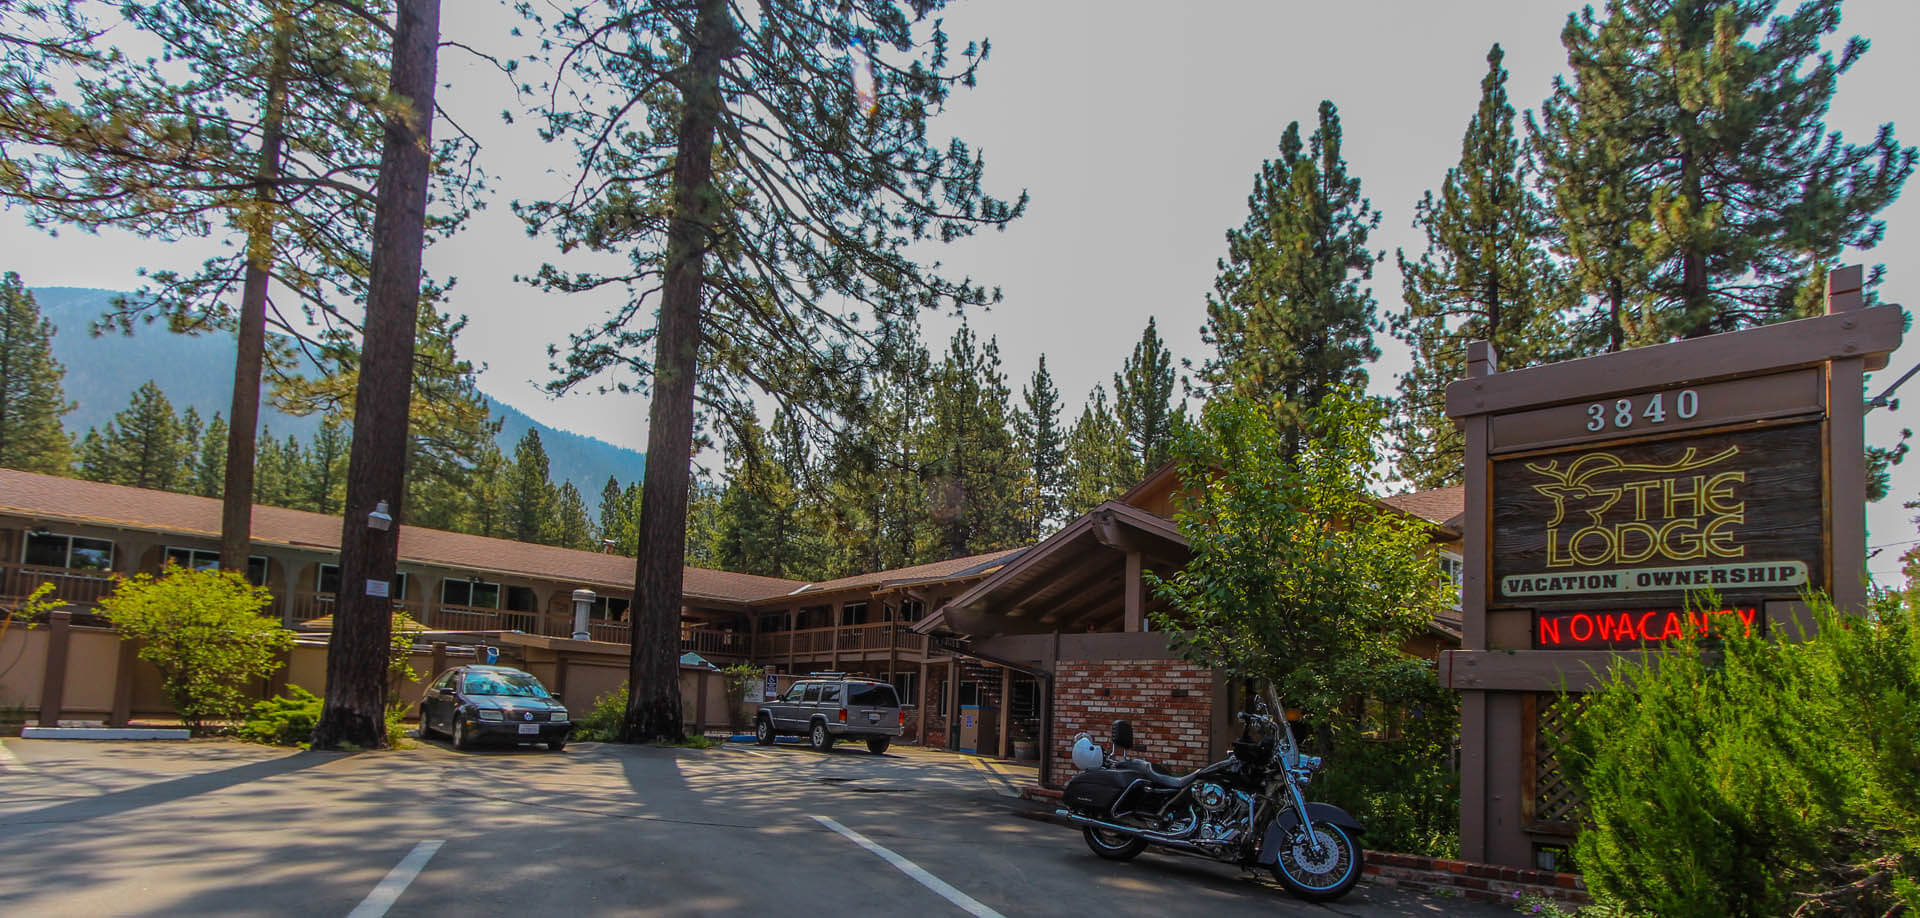 The resort signage at VRI's The Lodge at Lake Tahoe in California.